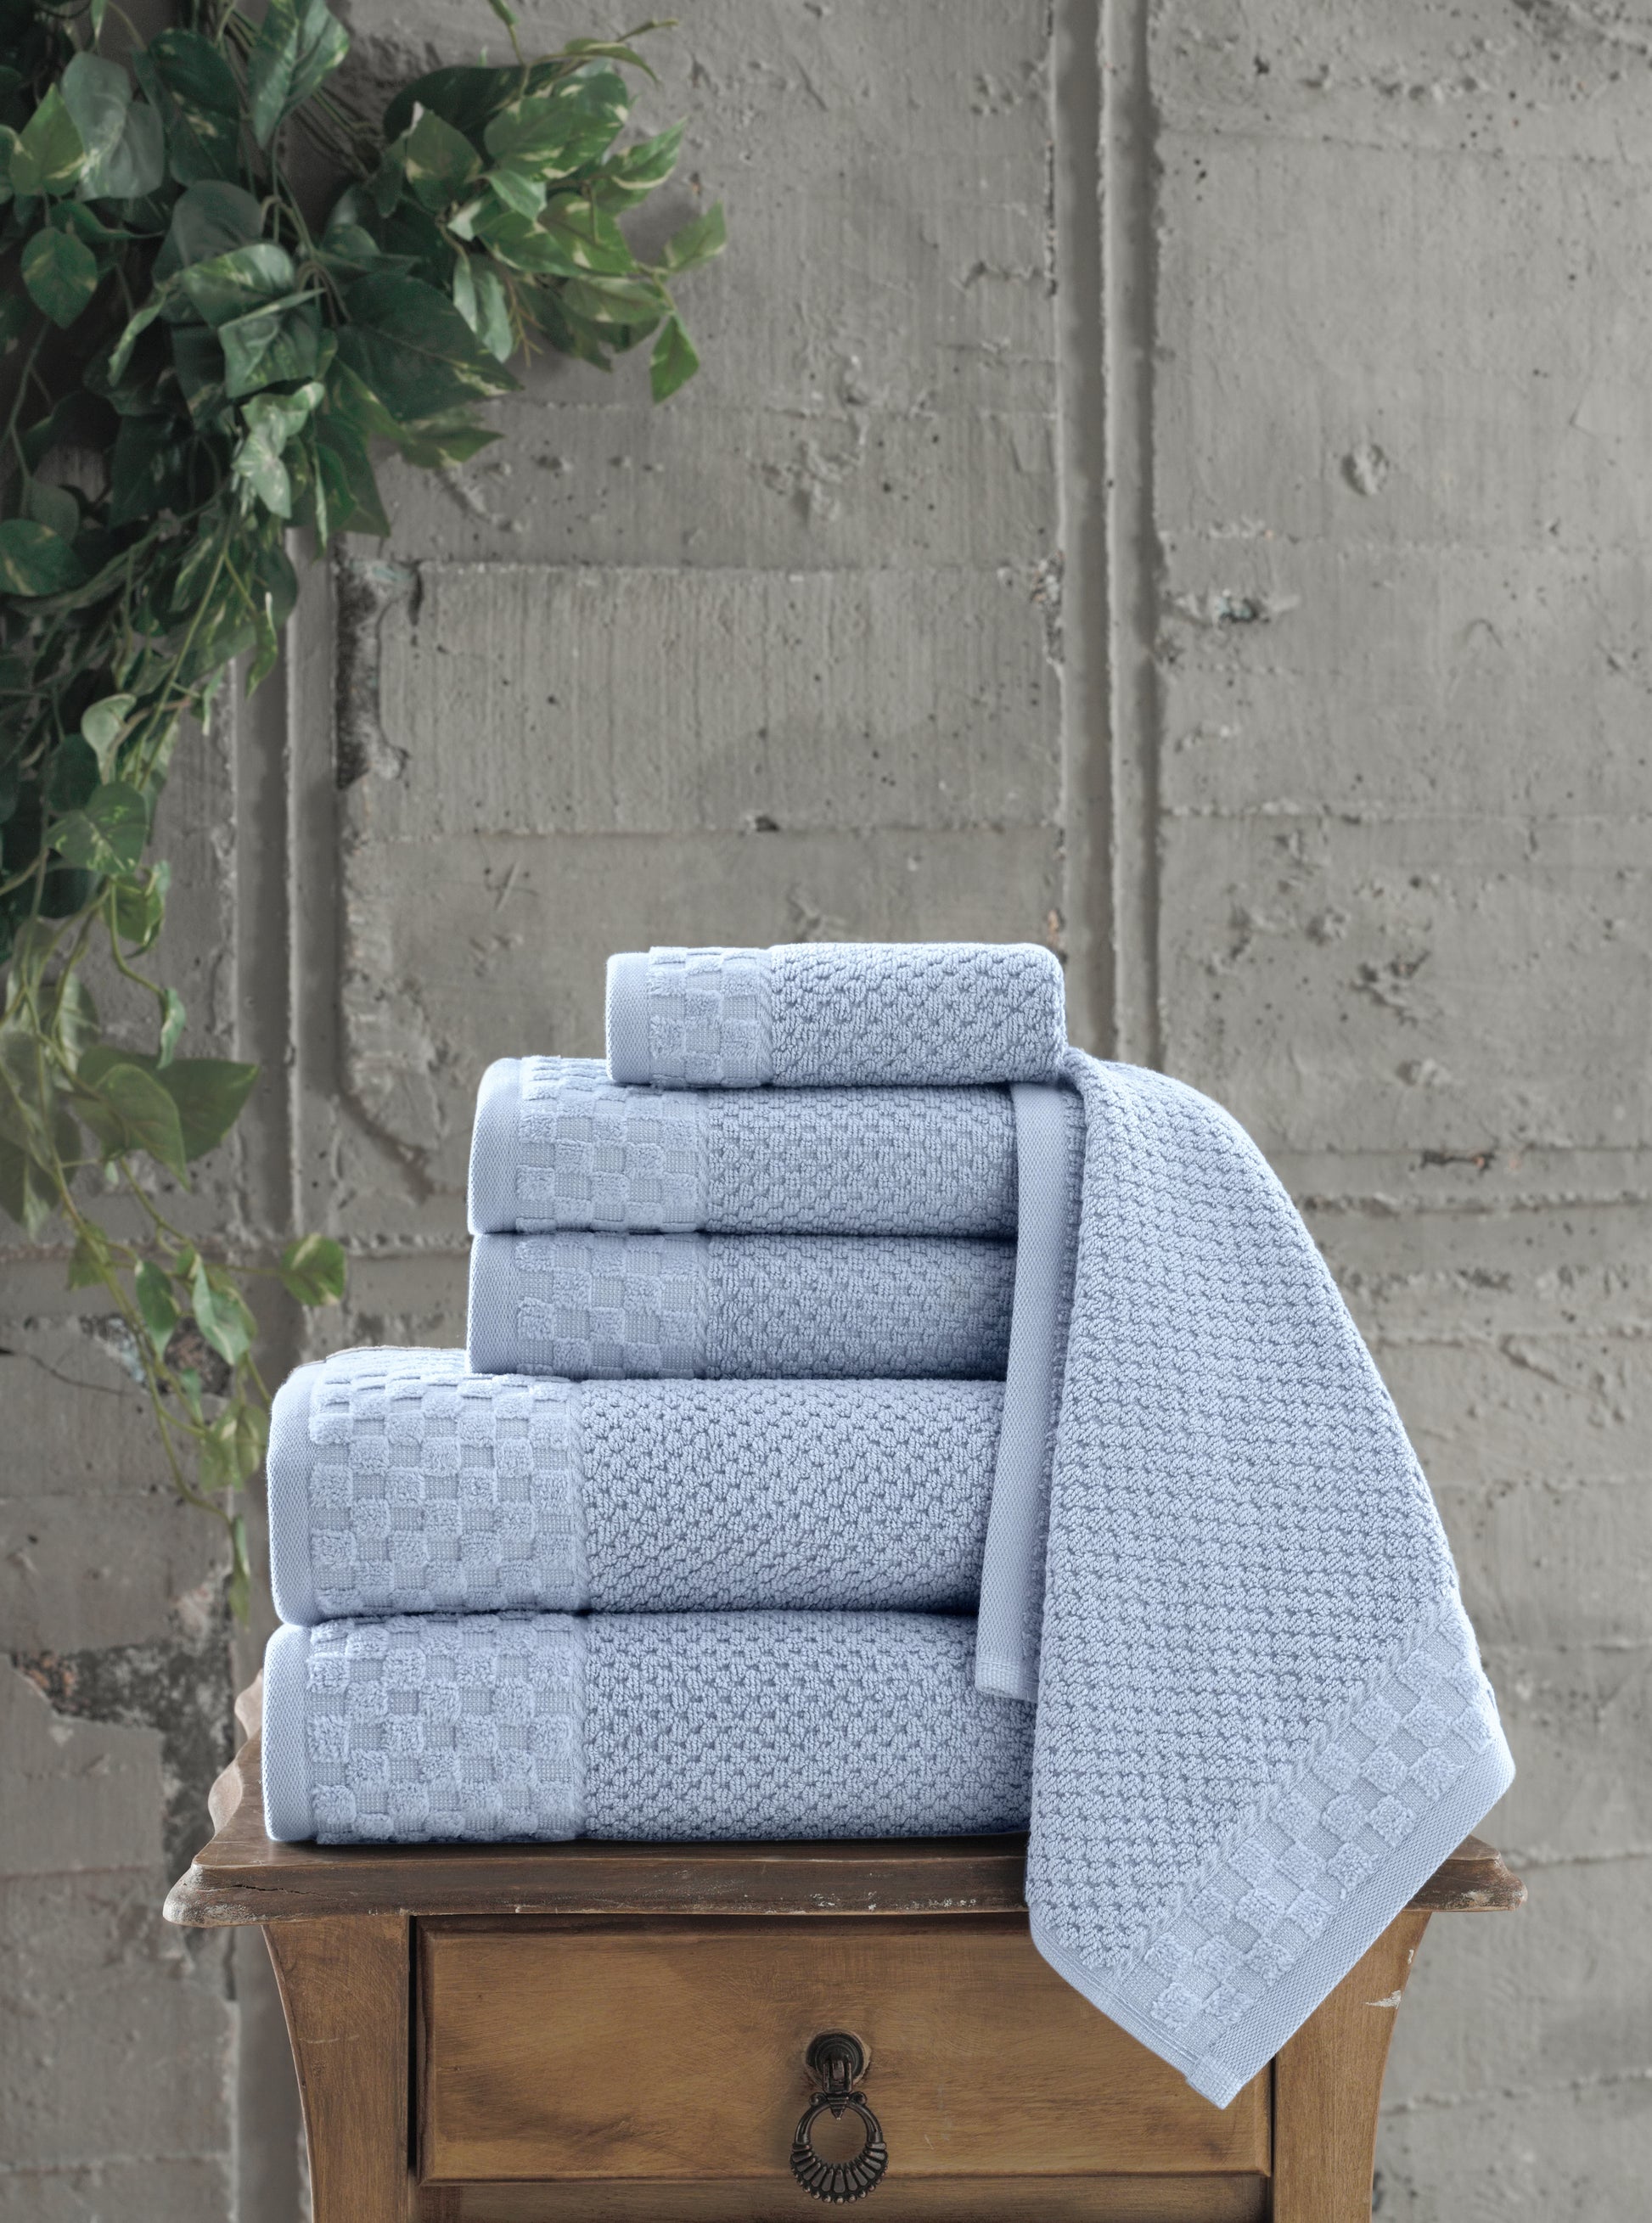 Classic Turkish Towels Genuine Cotton Boston 6 Piece Set, 27X55,16X27,12X12  - Kroger